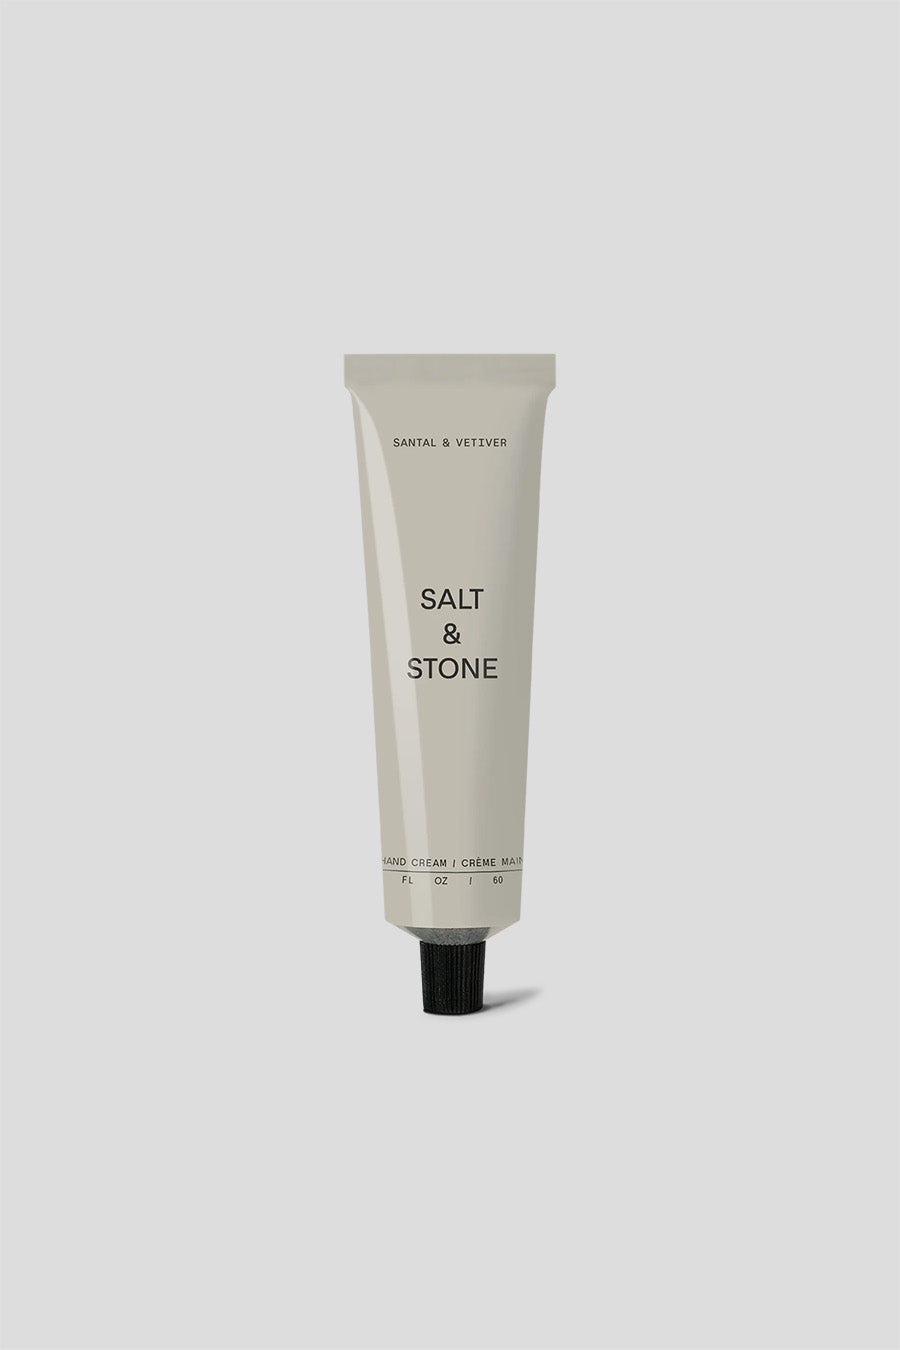 salt & stone - SANDALWOOD HAND CREAM - LE LABO STORE